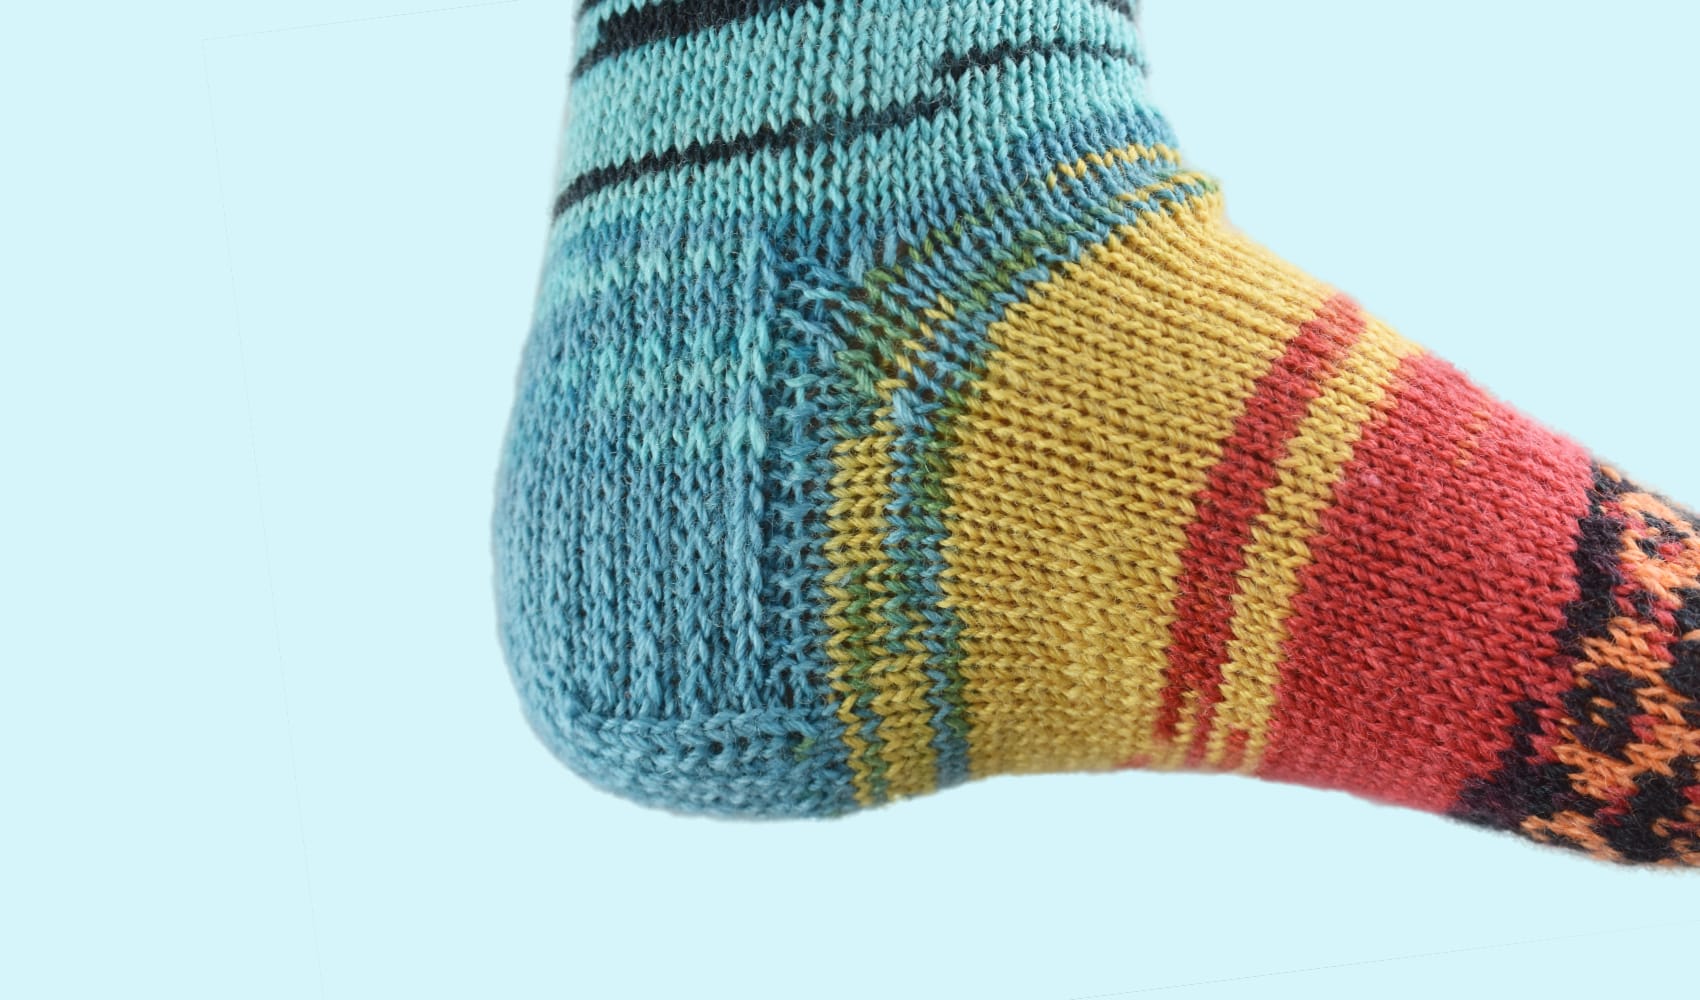 Socks knitting heel cap heel reinforced knitting cap heel,sock chart cap heel,reinforced knitting cap heel,tutorial cap heel